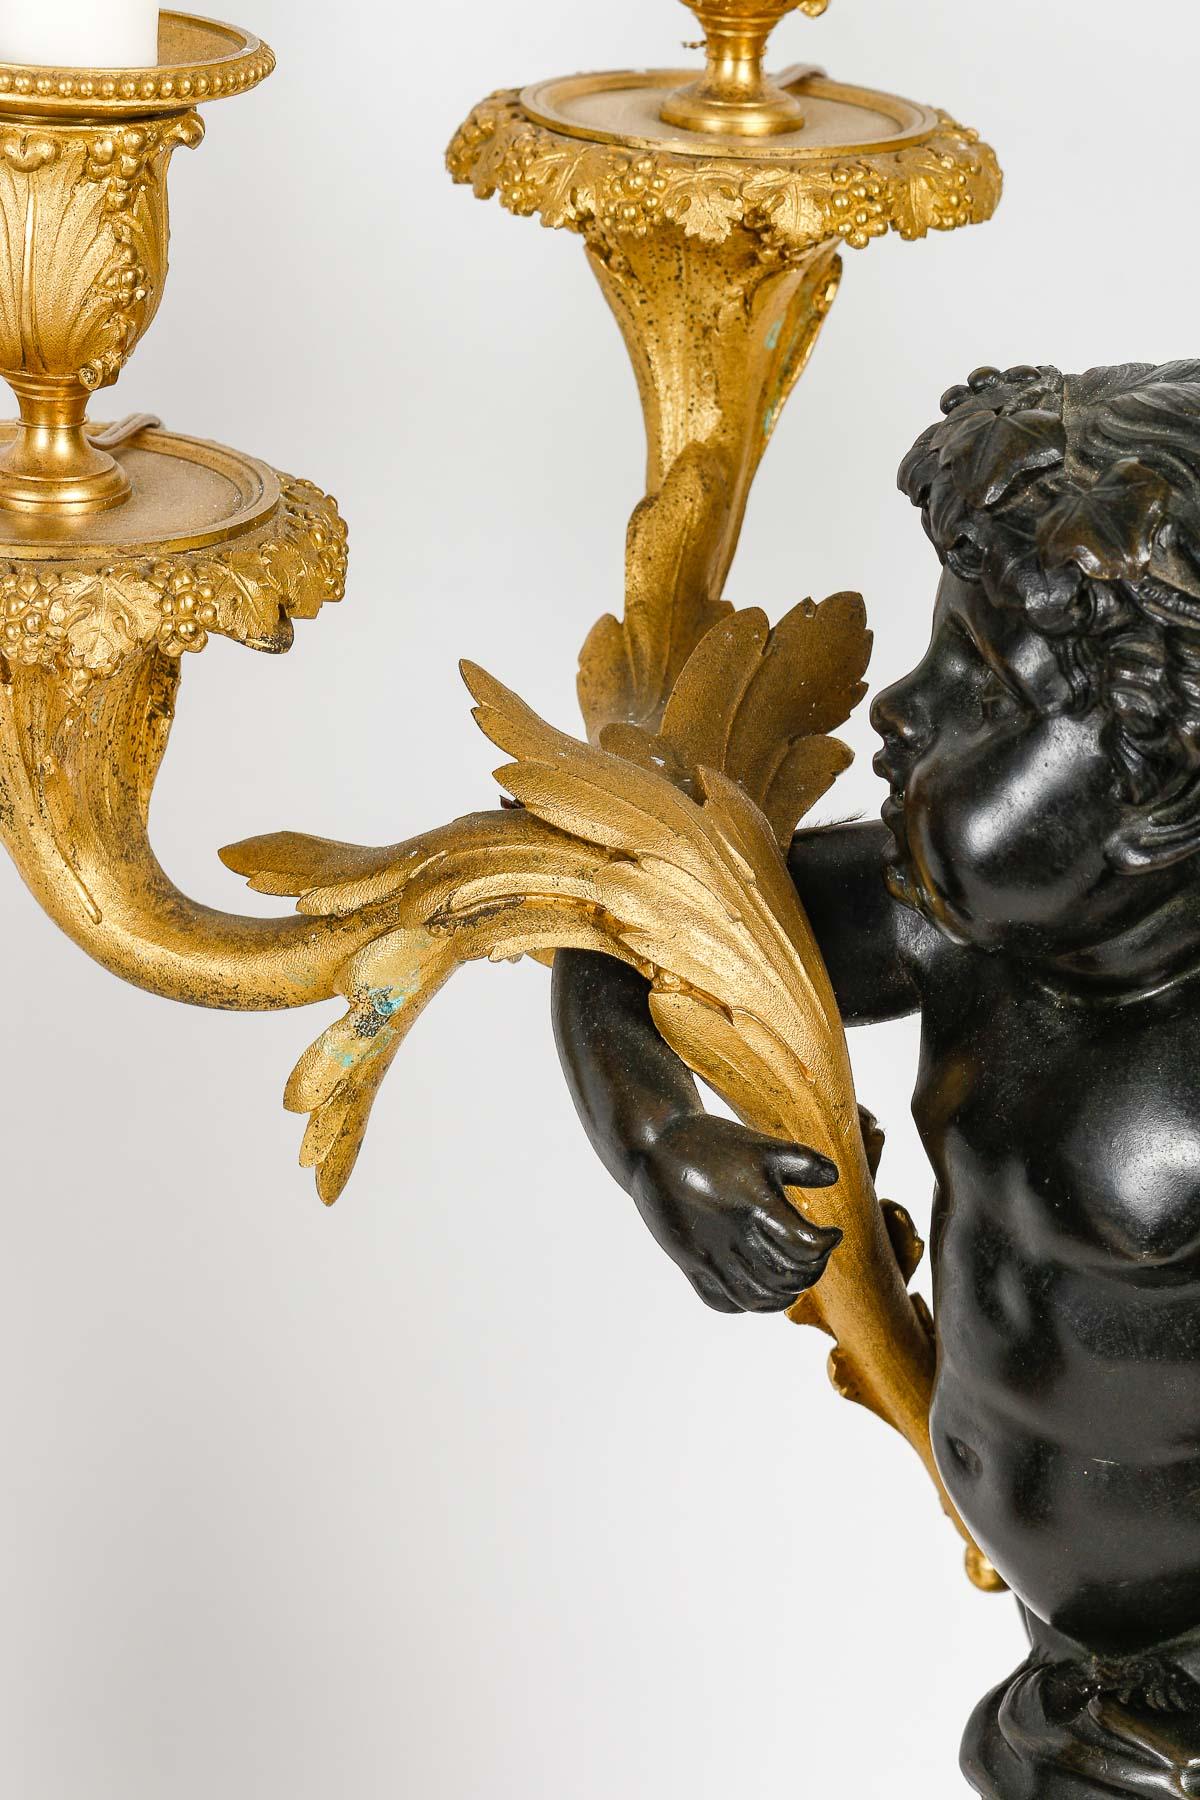 Pair of Amours Candelabra, Grande décoration, Gilt bronze, Antique bronze. 4